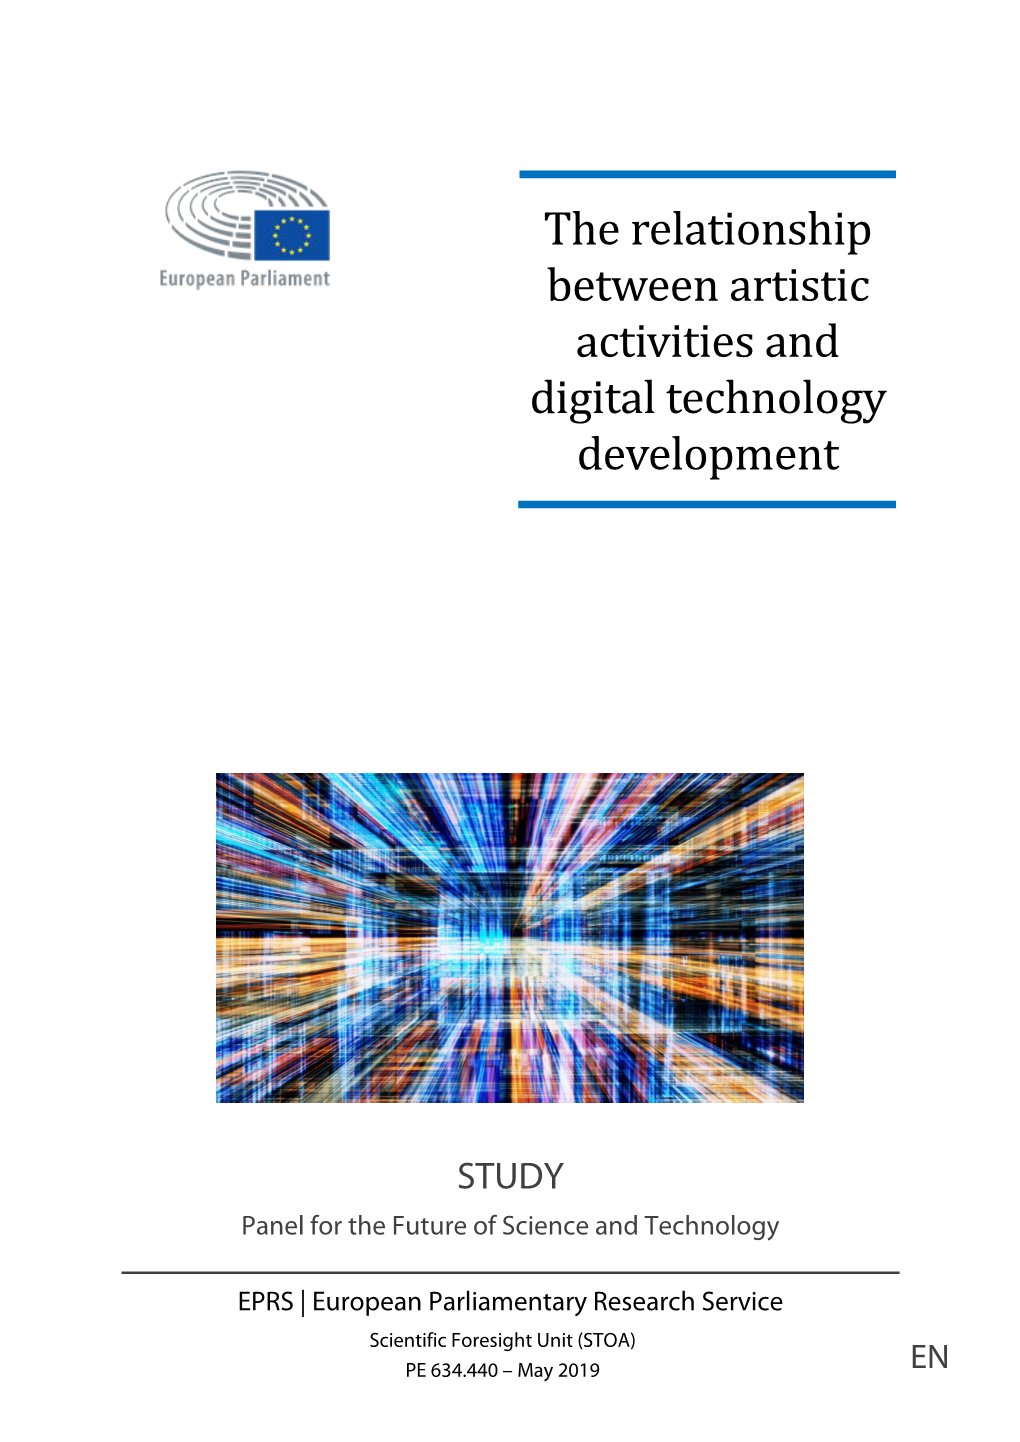 The Relationship Between Artistic Activities and Digital Technology Development